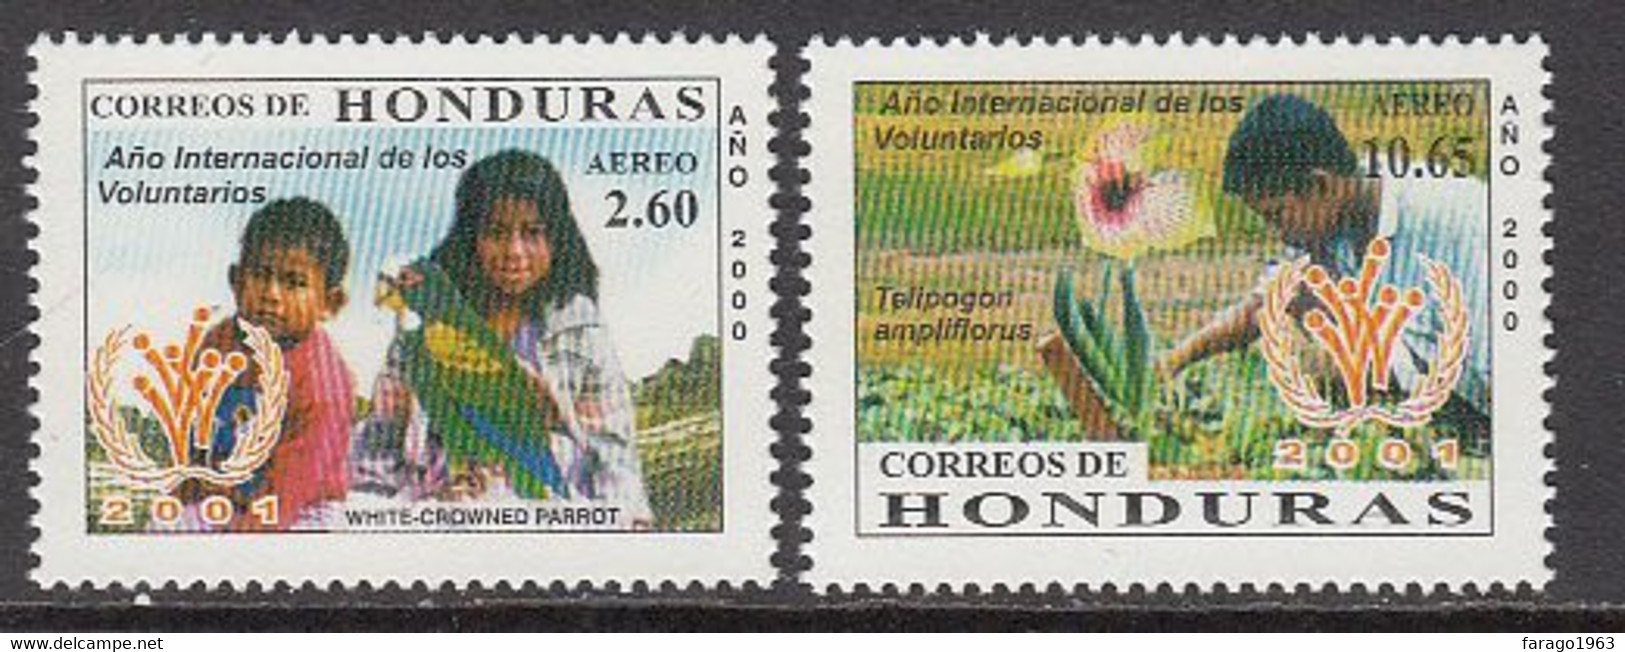 2000 Honduras International Volunteerism Year Parrots Flowers Complete Set Of 2 MNH - Honduras